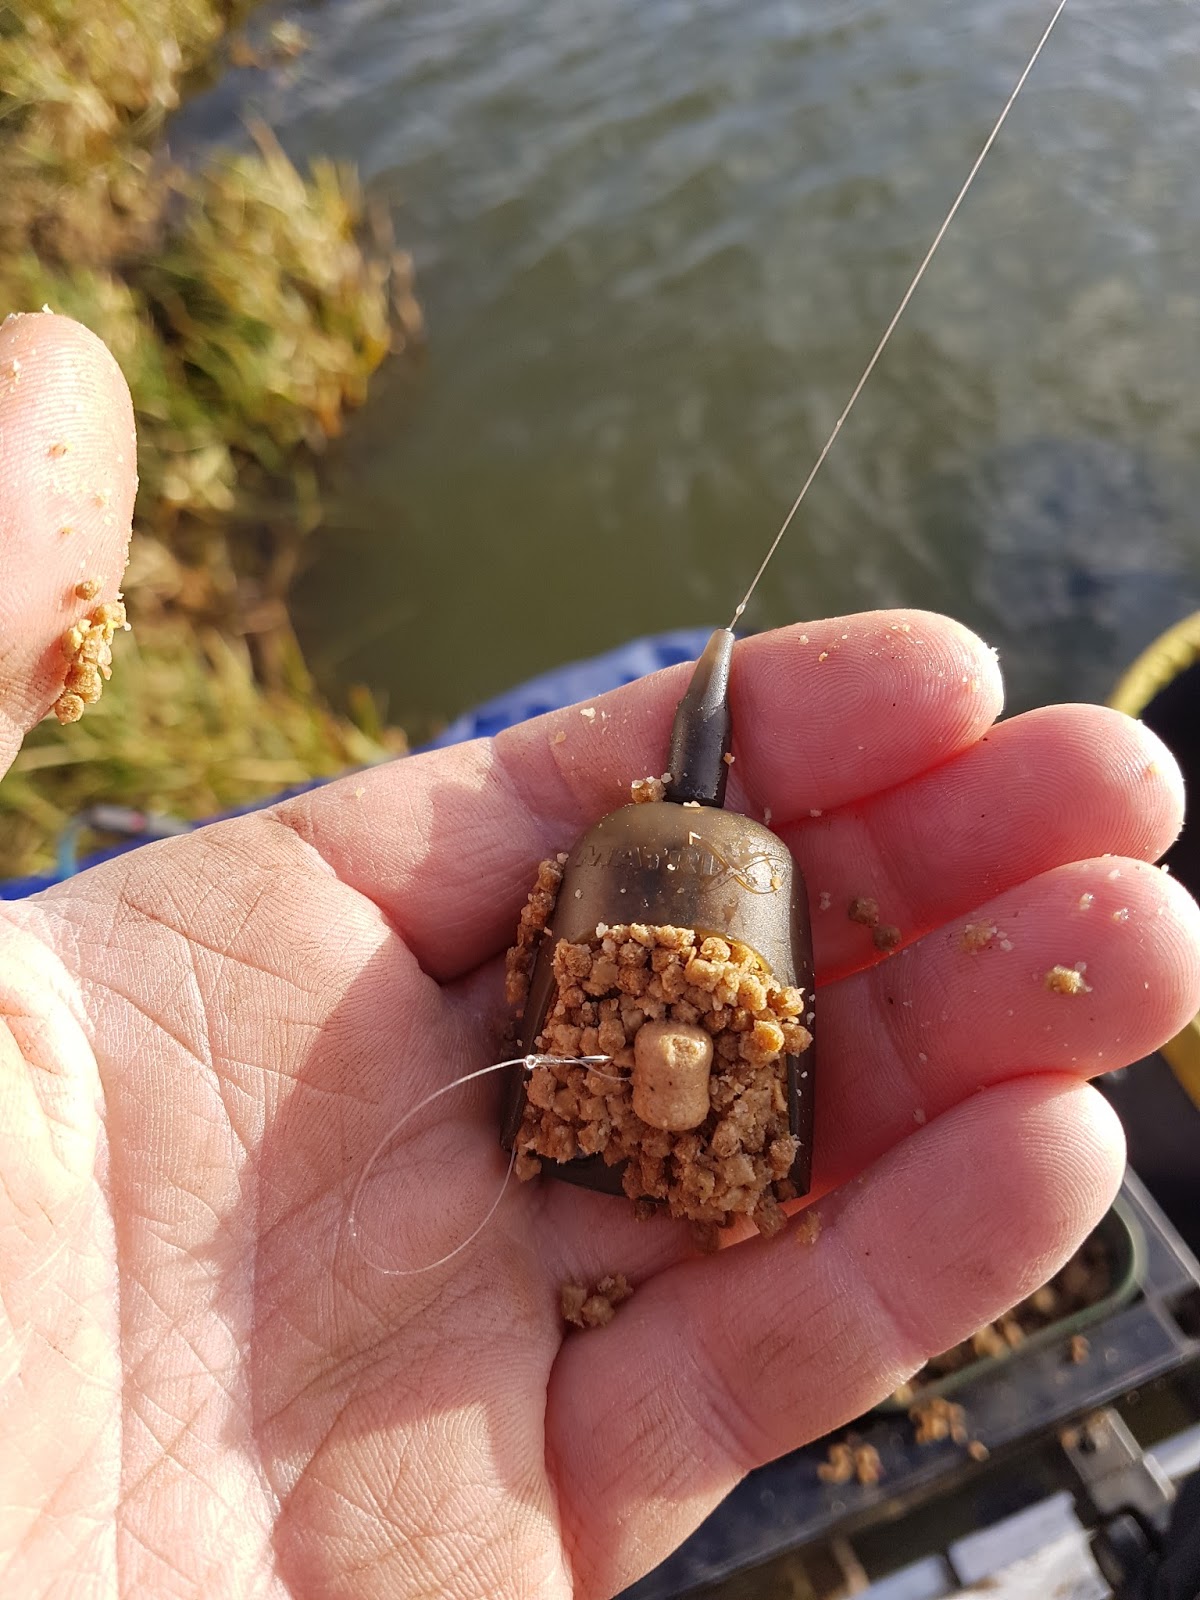 6mm Trout Elite Fishing Pellets 10kg In Weight